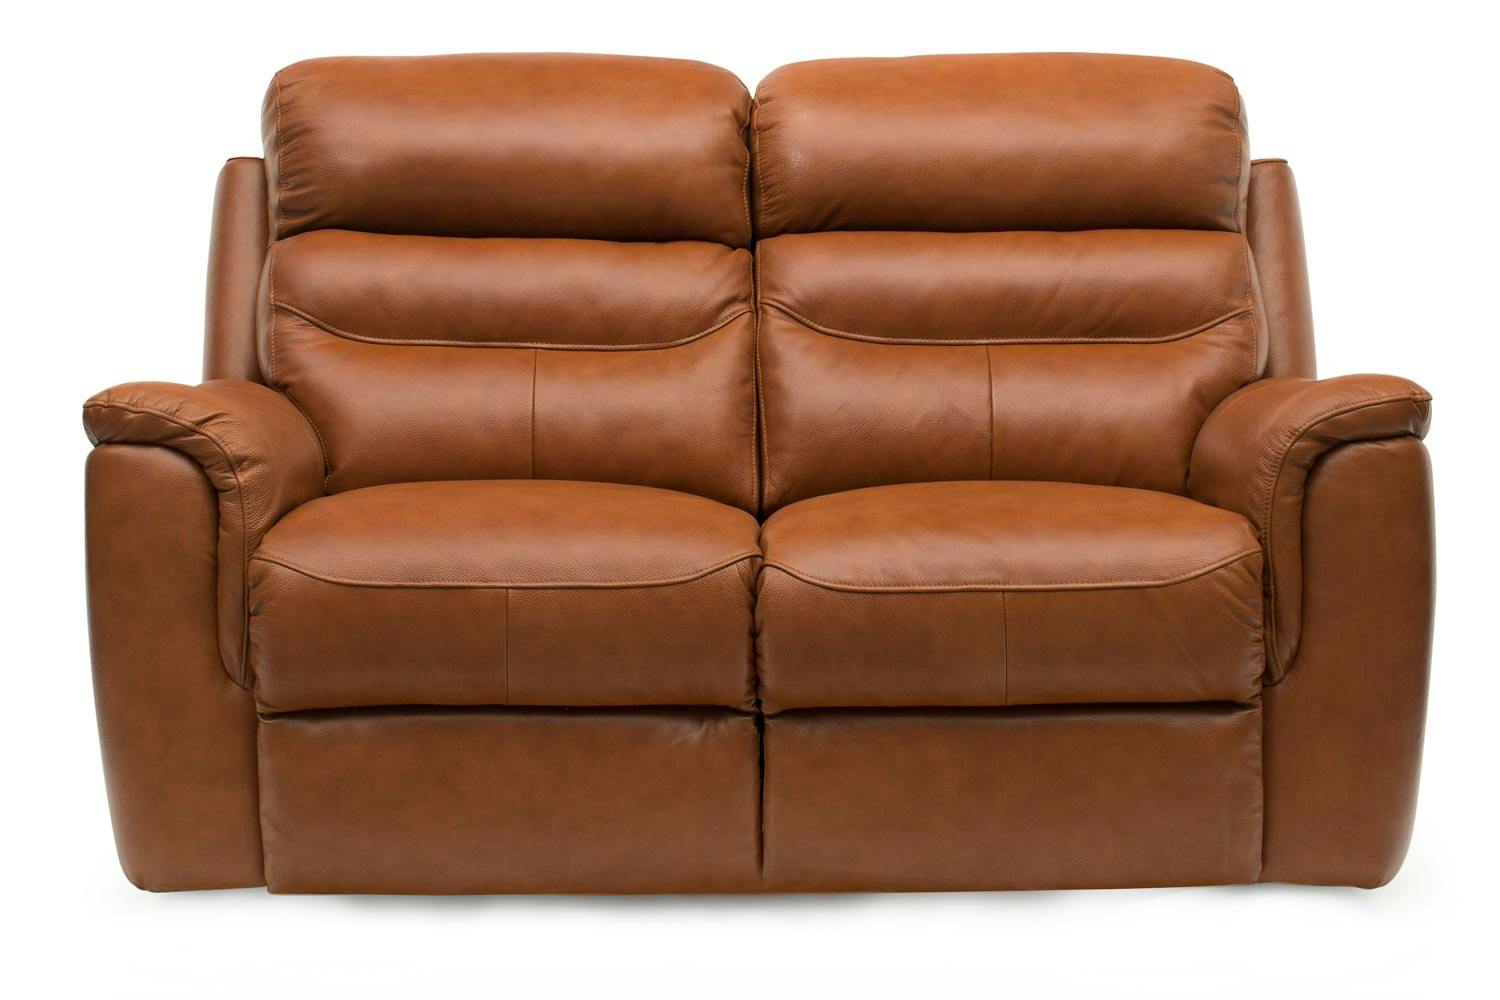 leather recliner sofa ireland